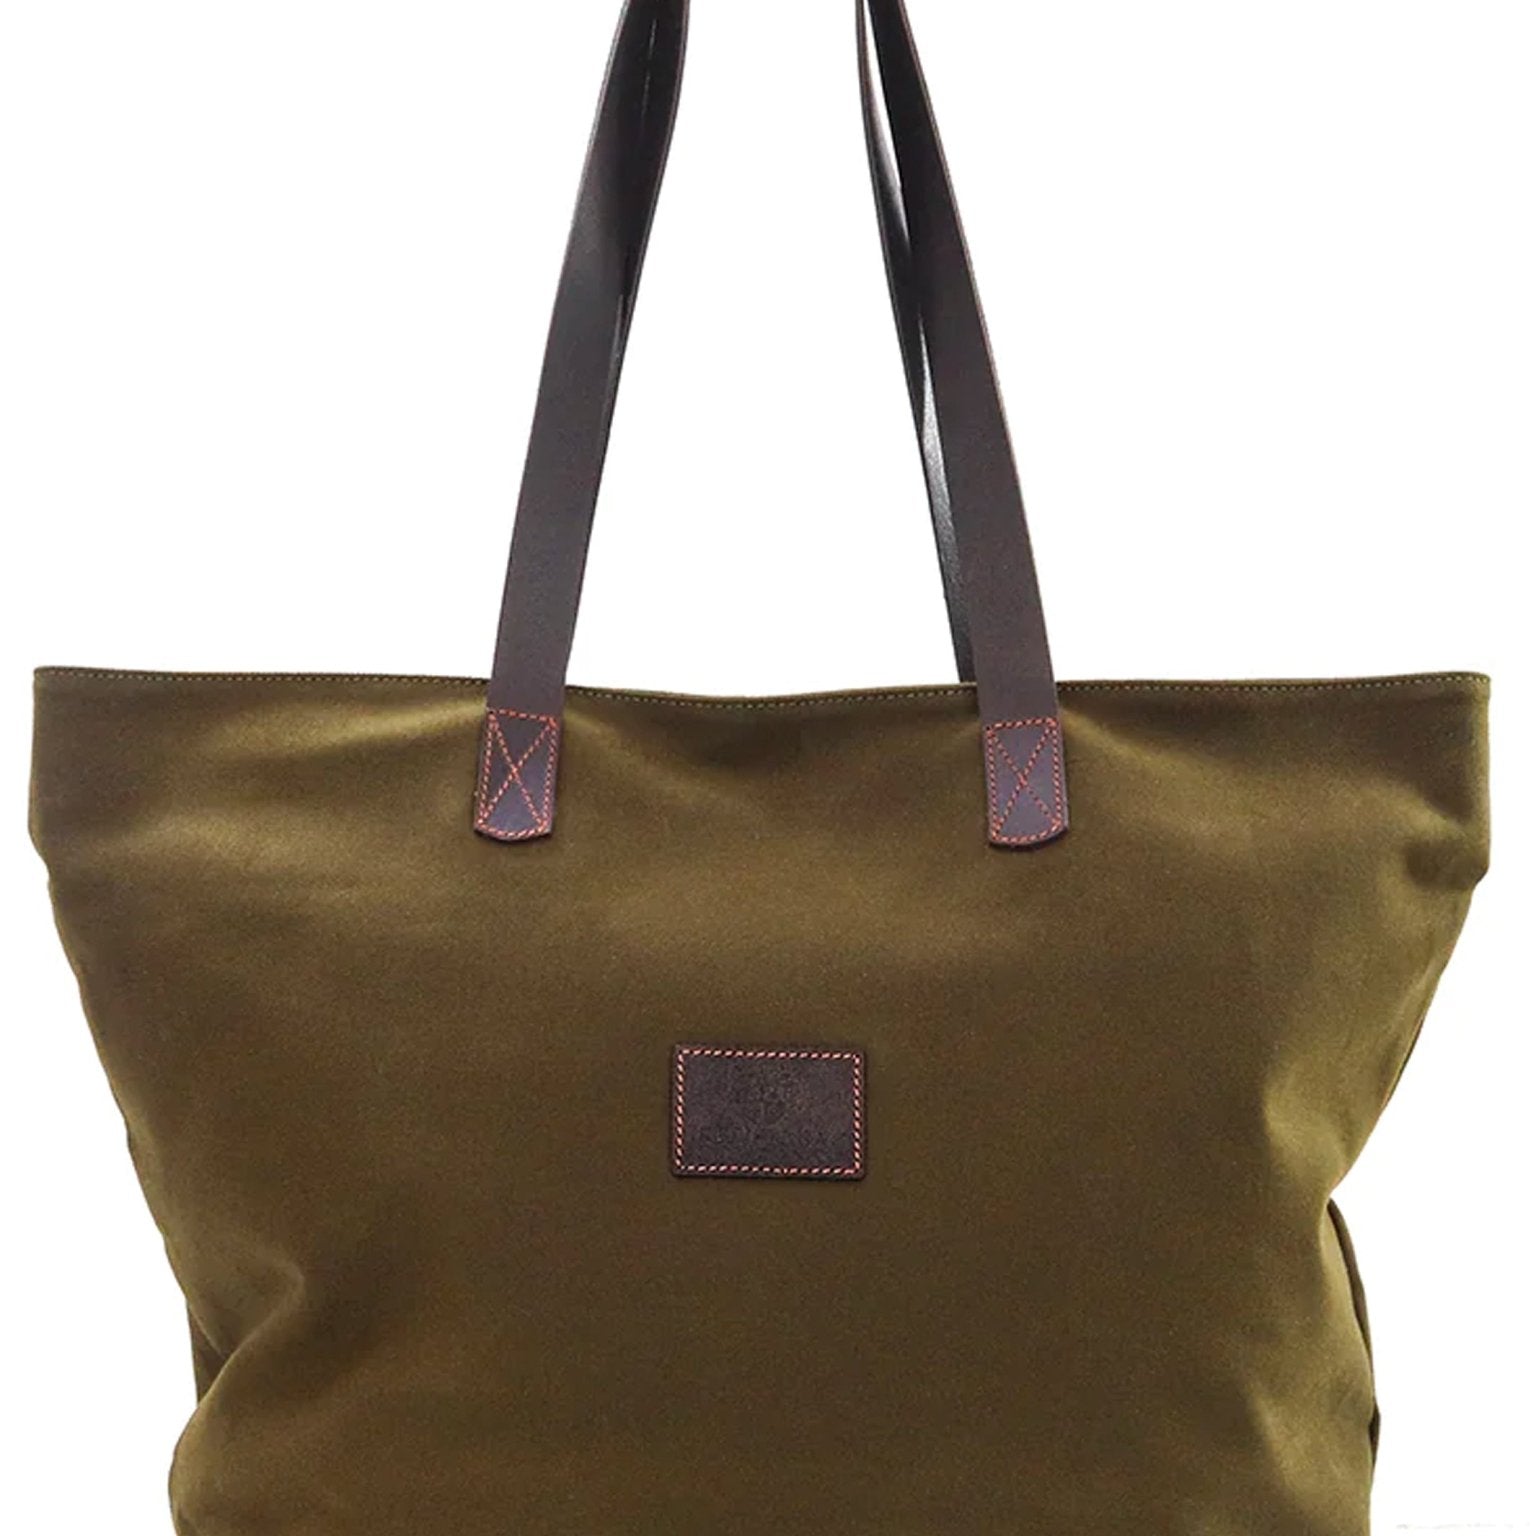 4elementsclothingThe British Bag CompanyBritish Bag Company - Waxed Canvas Tote Bag - Premium weight leather trim tote bagBag710353